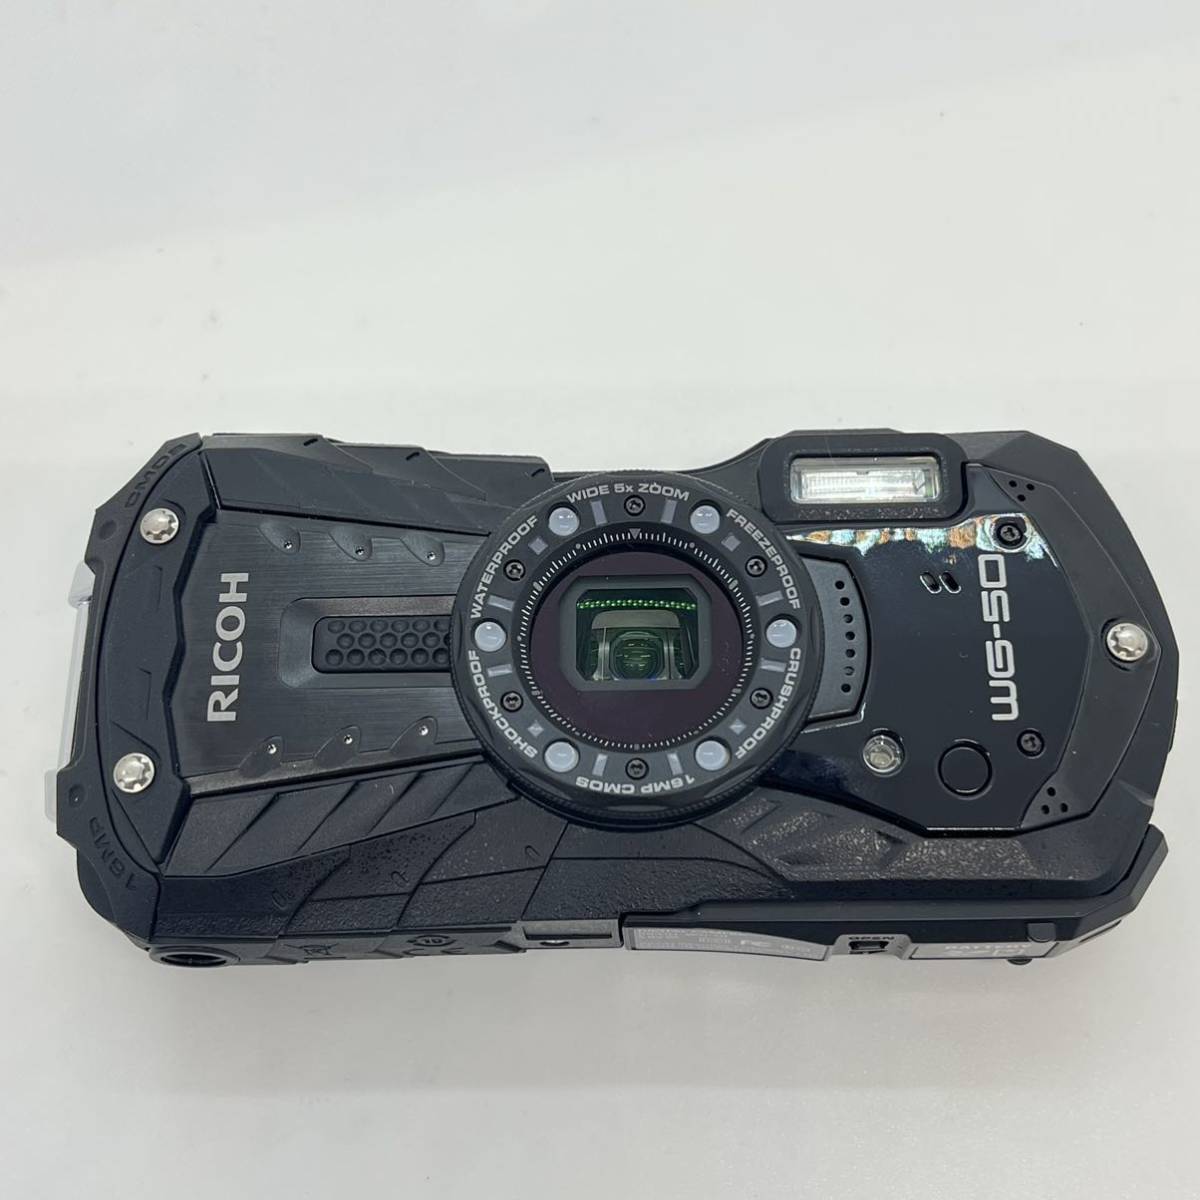 RICOH リコー WG-50 デジタルカメラ ブラック 防水 耐衝撃 防塵 耐寒